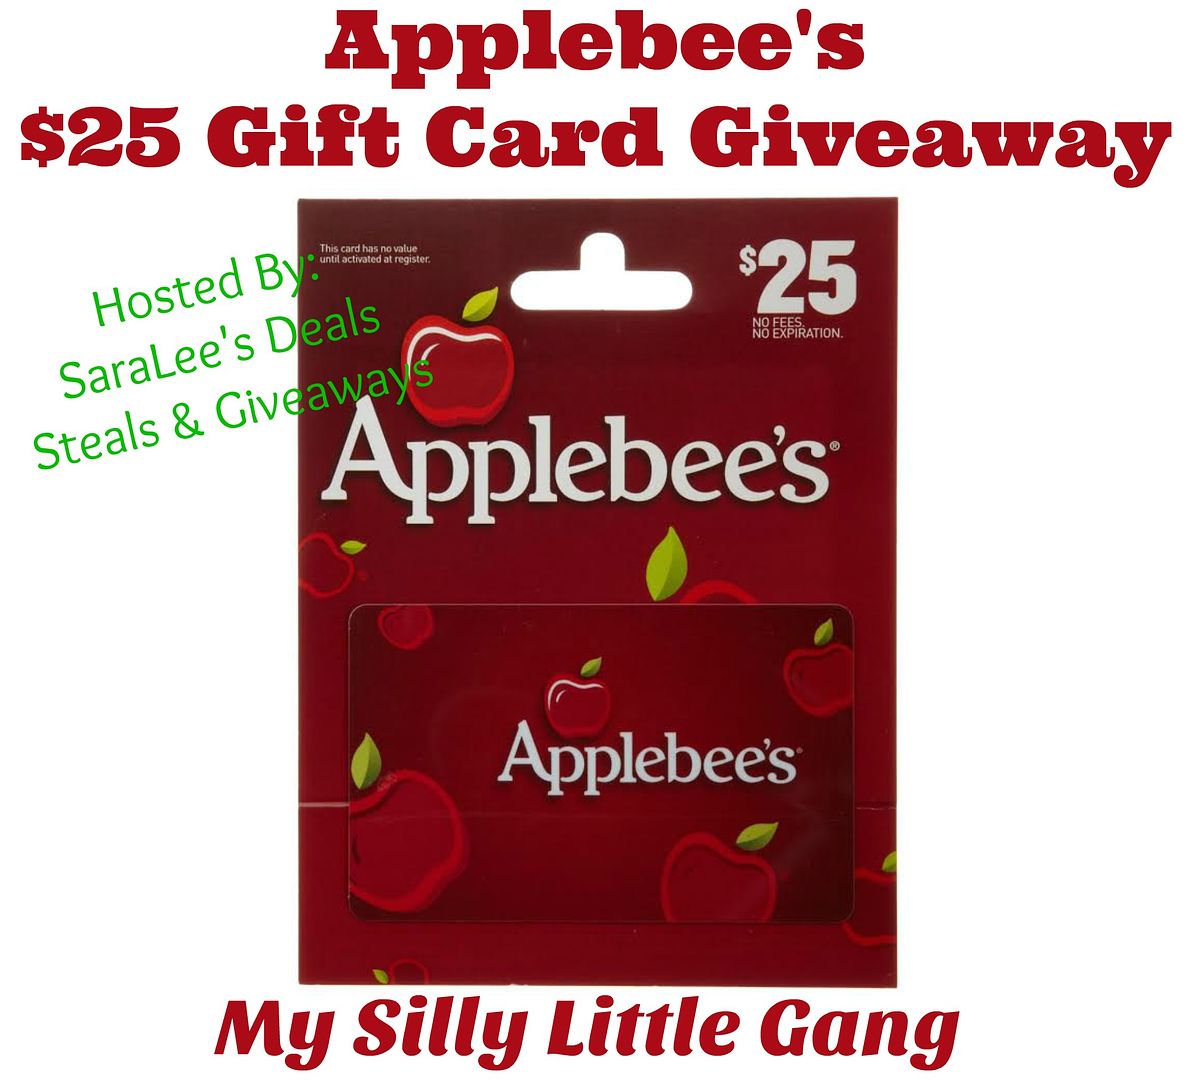 Applebee's Gift Card Giveaway